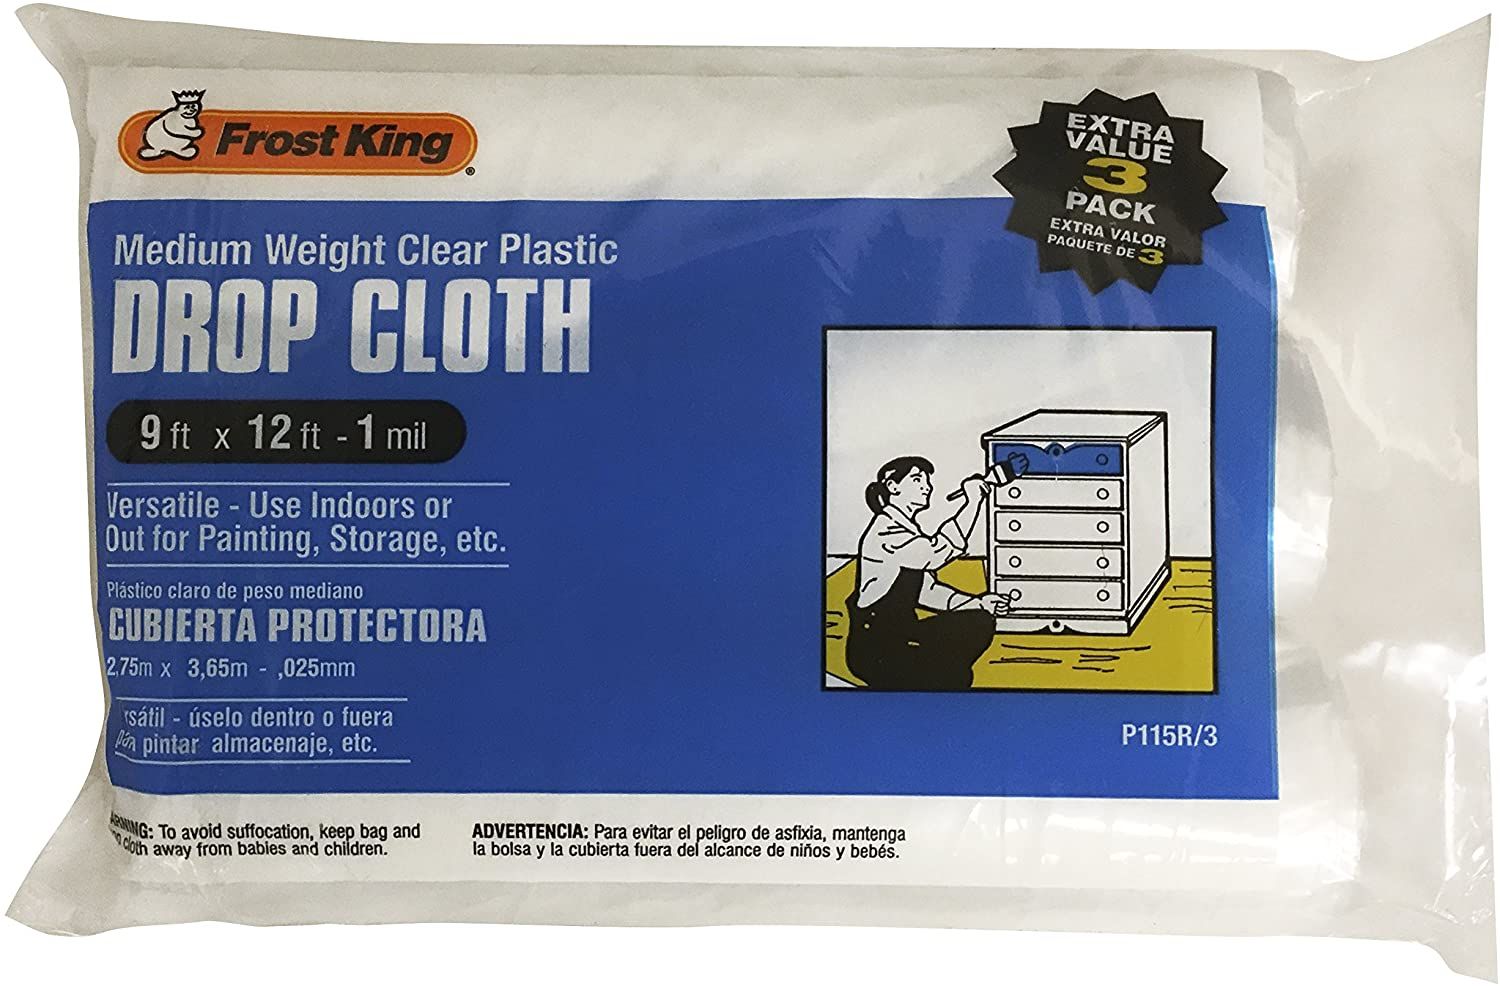 Frost King Medium Weight Clear Plastic Drop Cloth